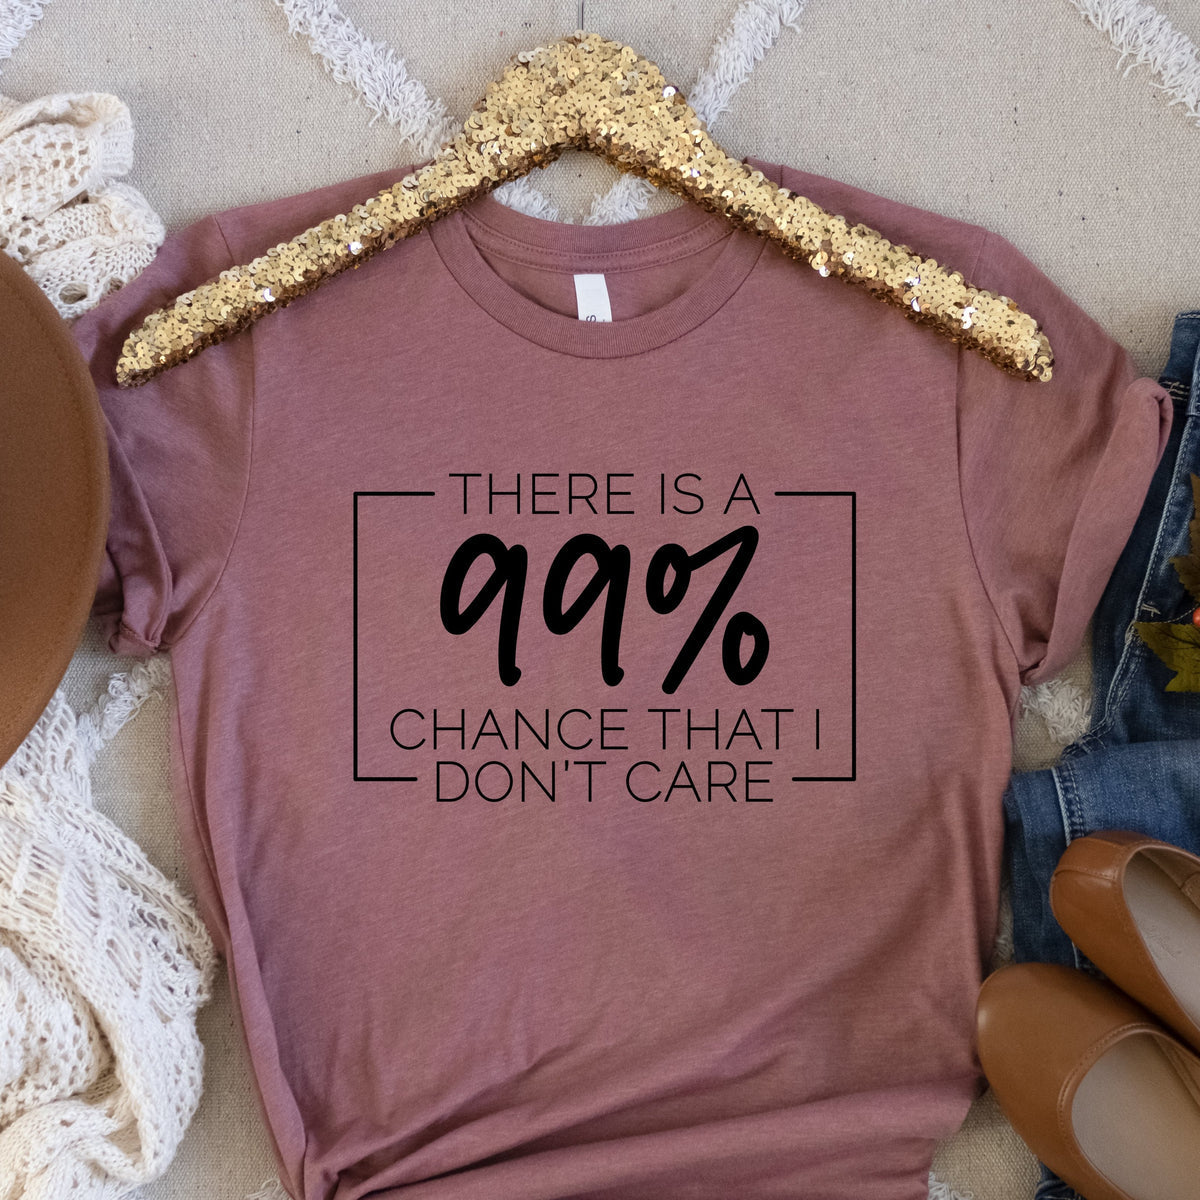 99% chance